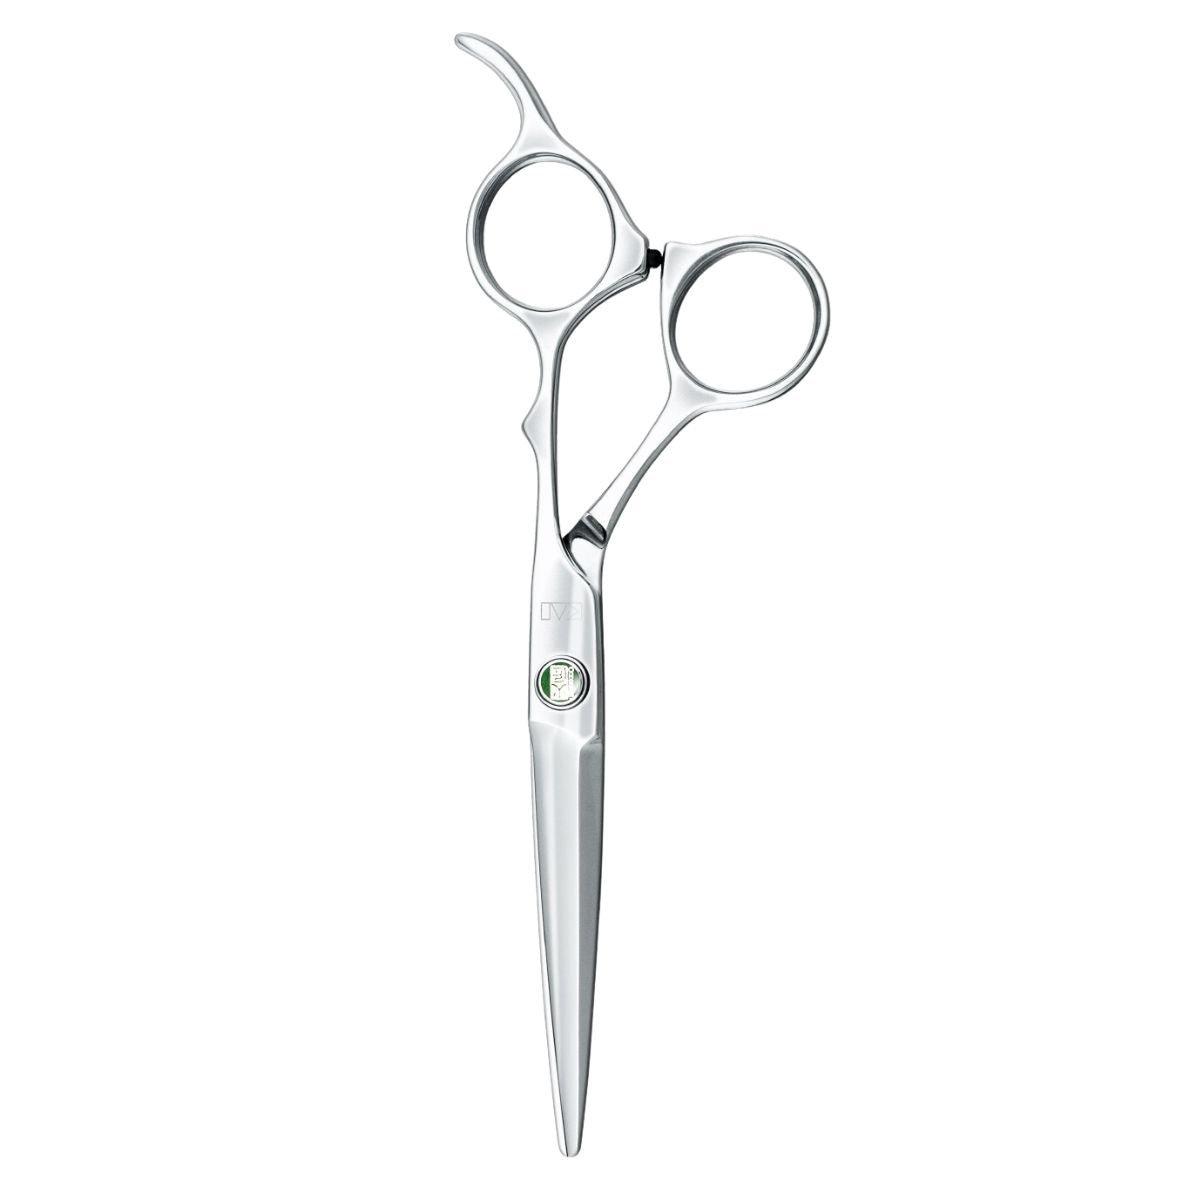 Kasho Sagano Offset Hair Cutting Scissors - Japan Scissors